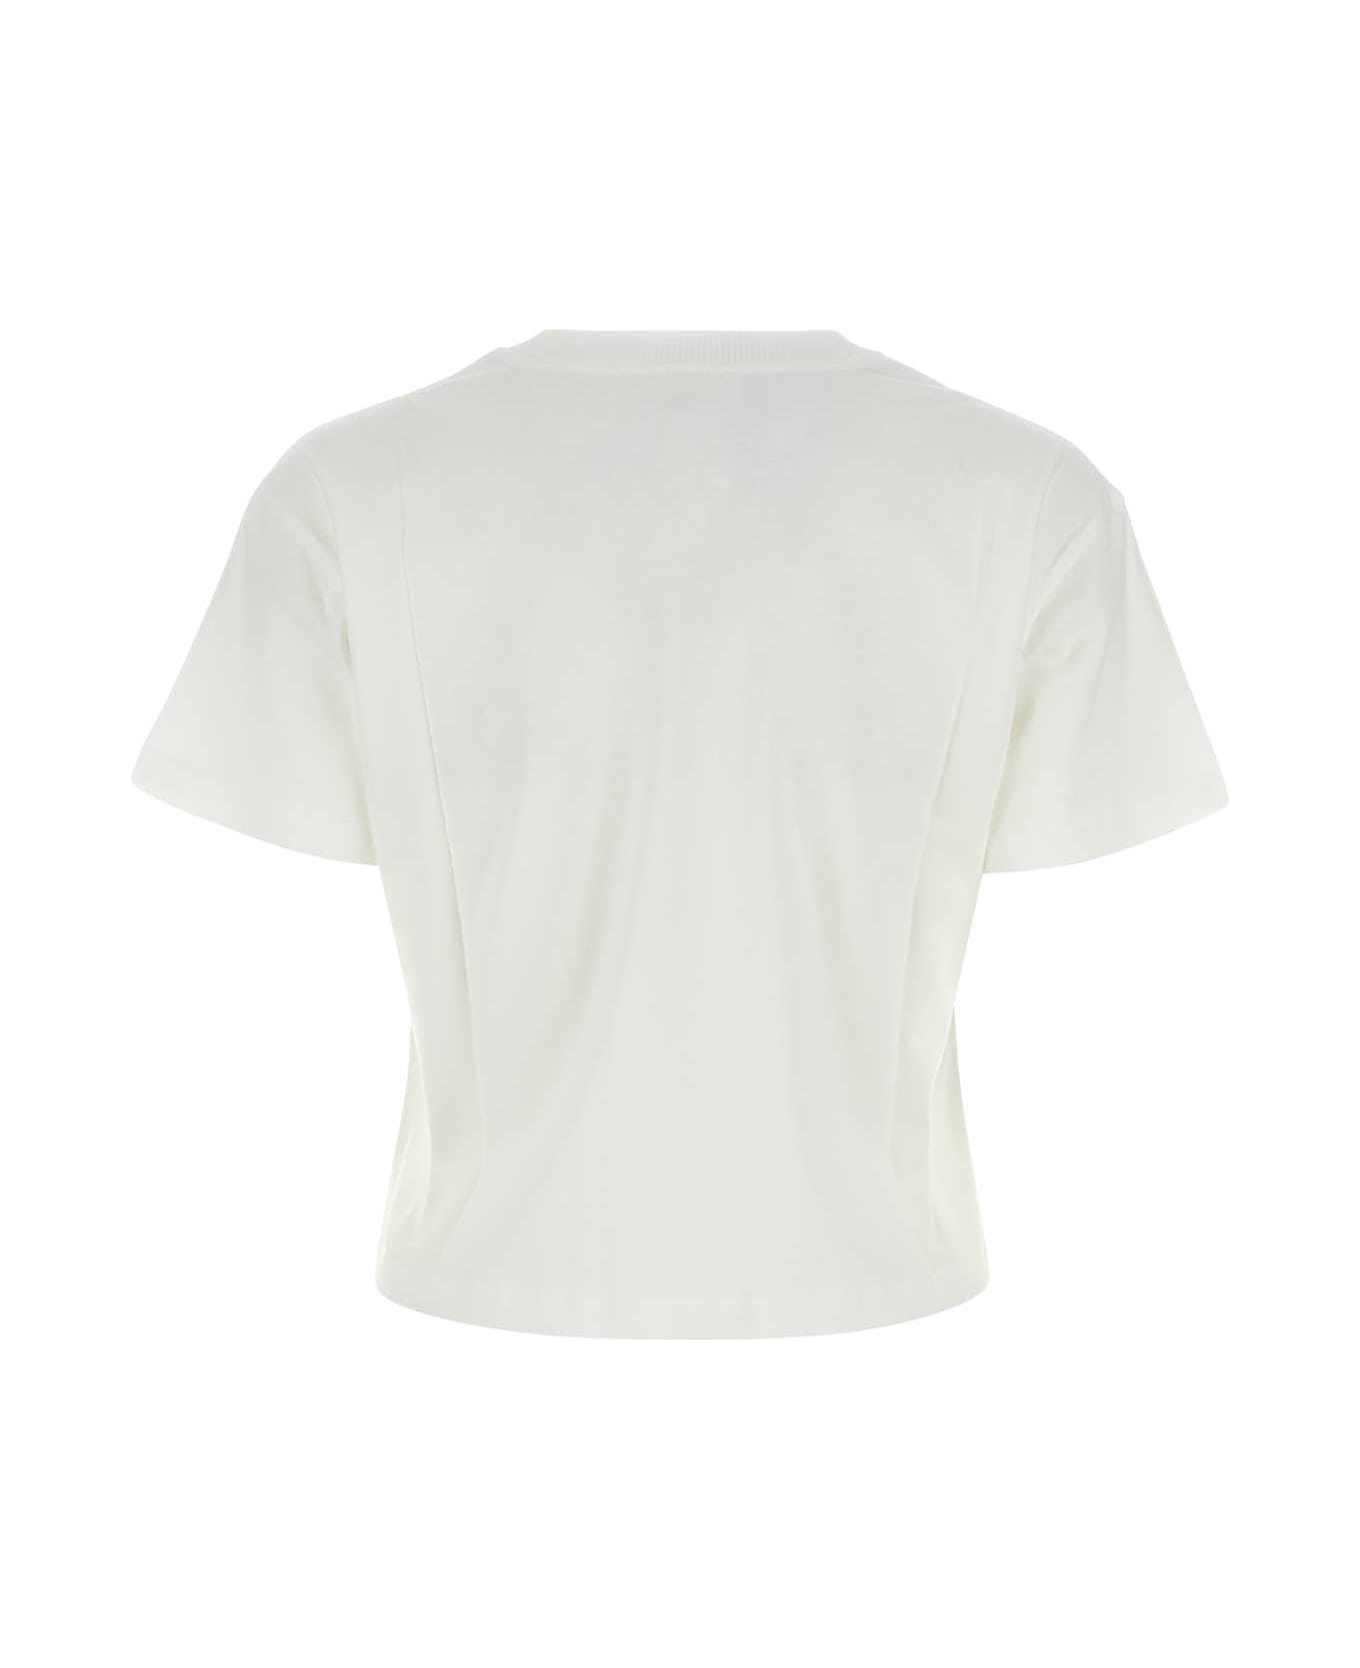 A.P.C. White Cotton T-shirt - BLANCNOIR